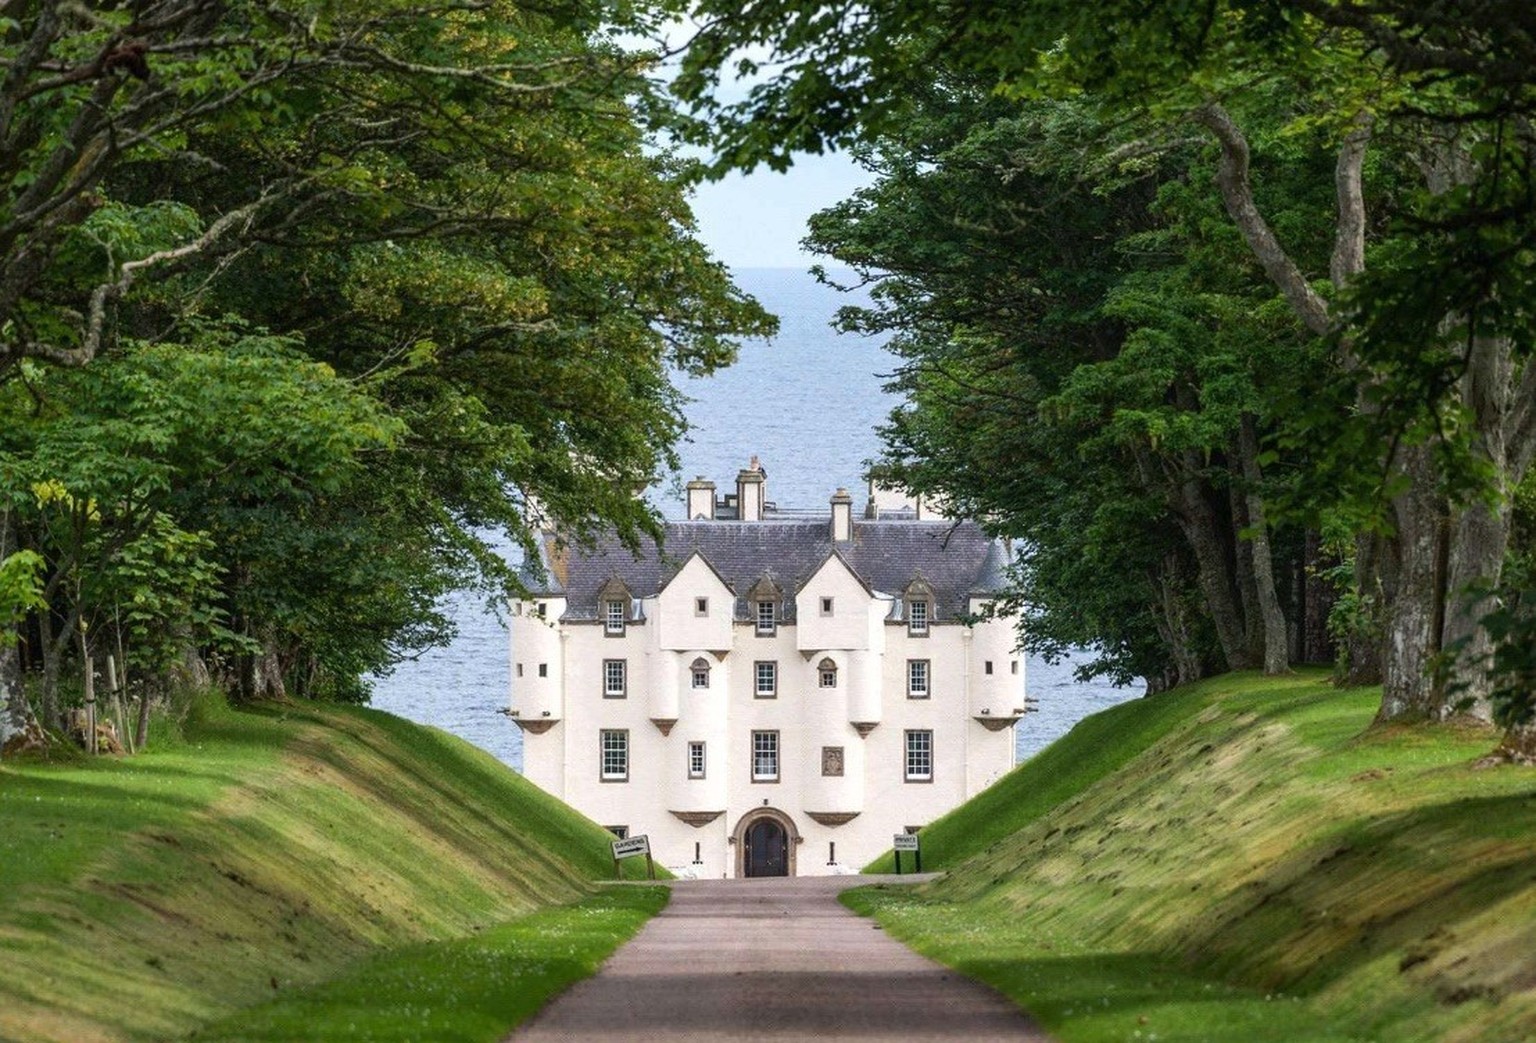 Dunbeath Castle Scotland 25 Millionen https://castleist.com/dunbeath-castle-for-sale-with-spectacular-estate/